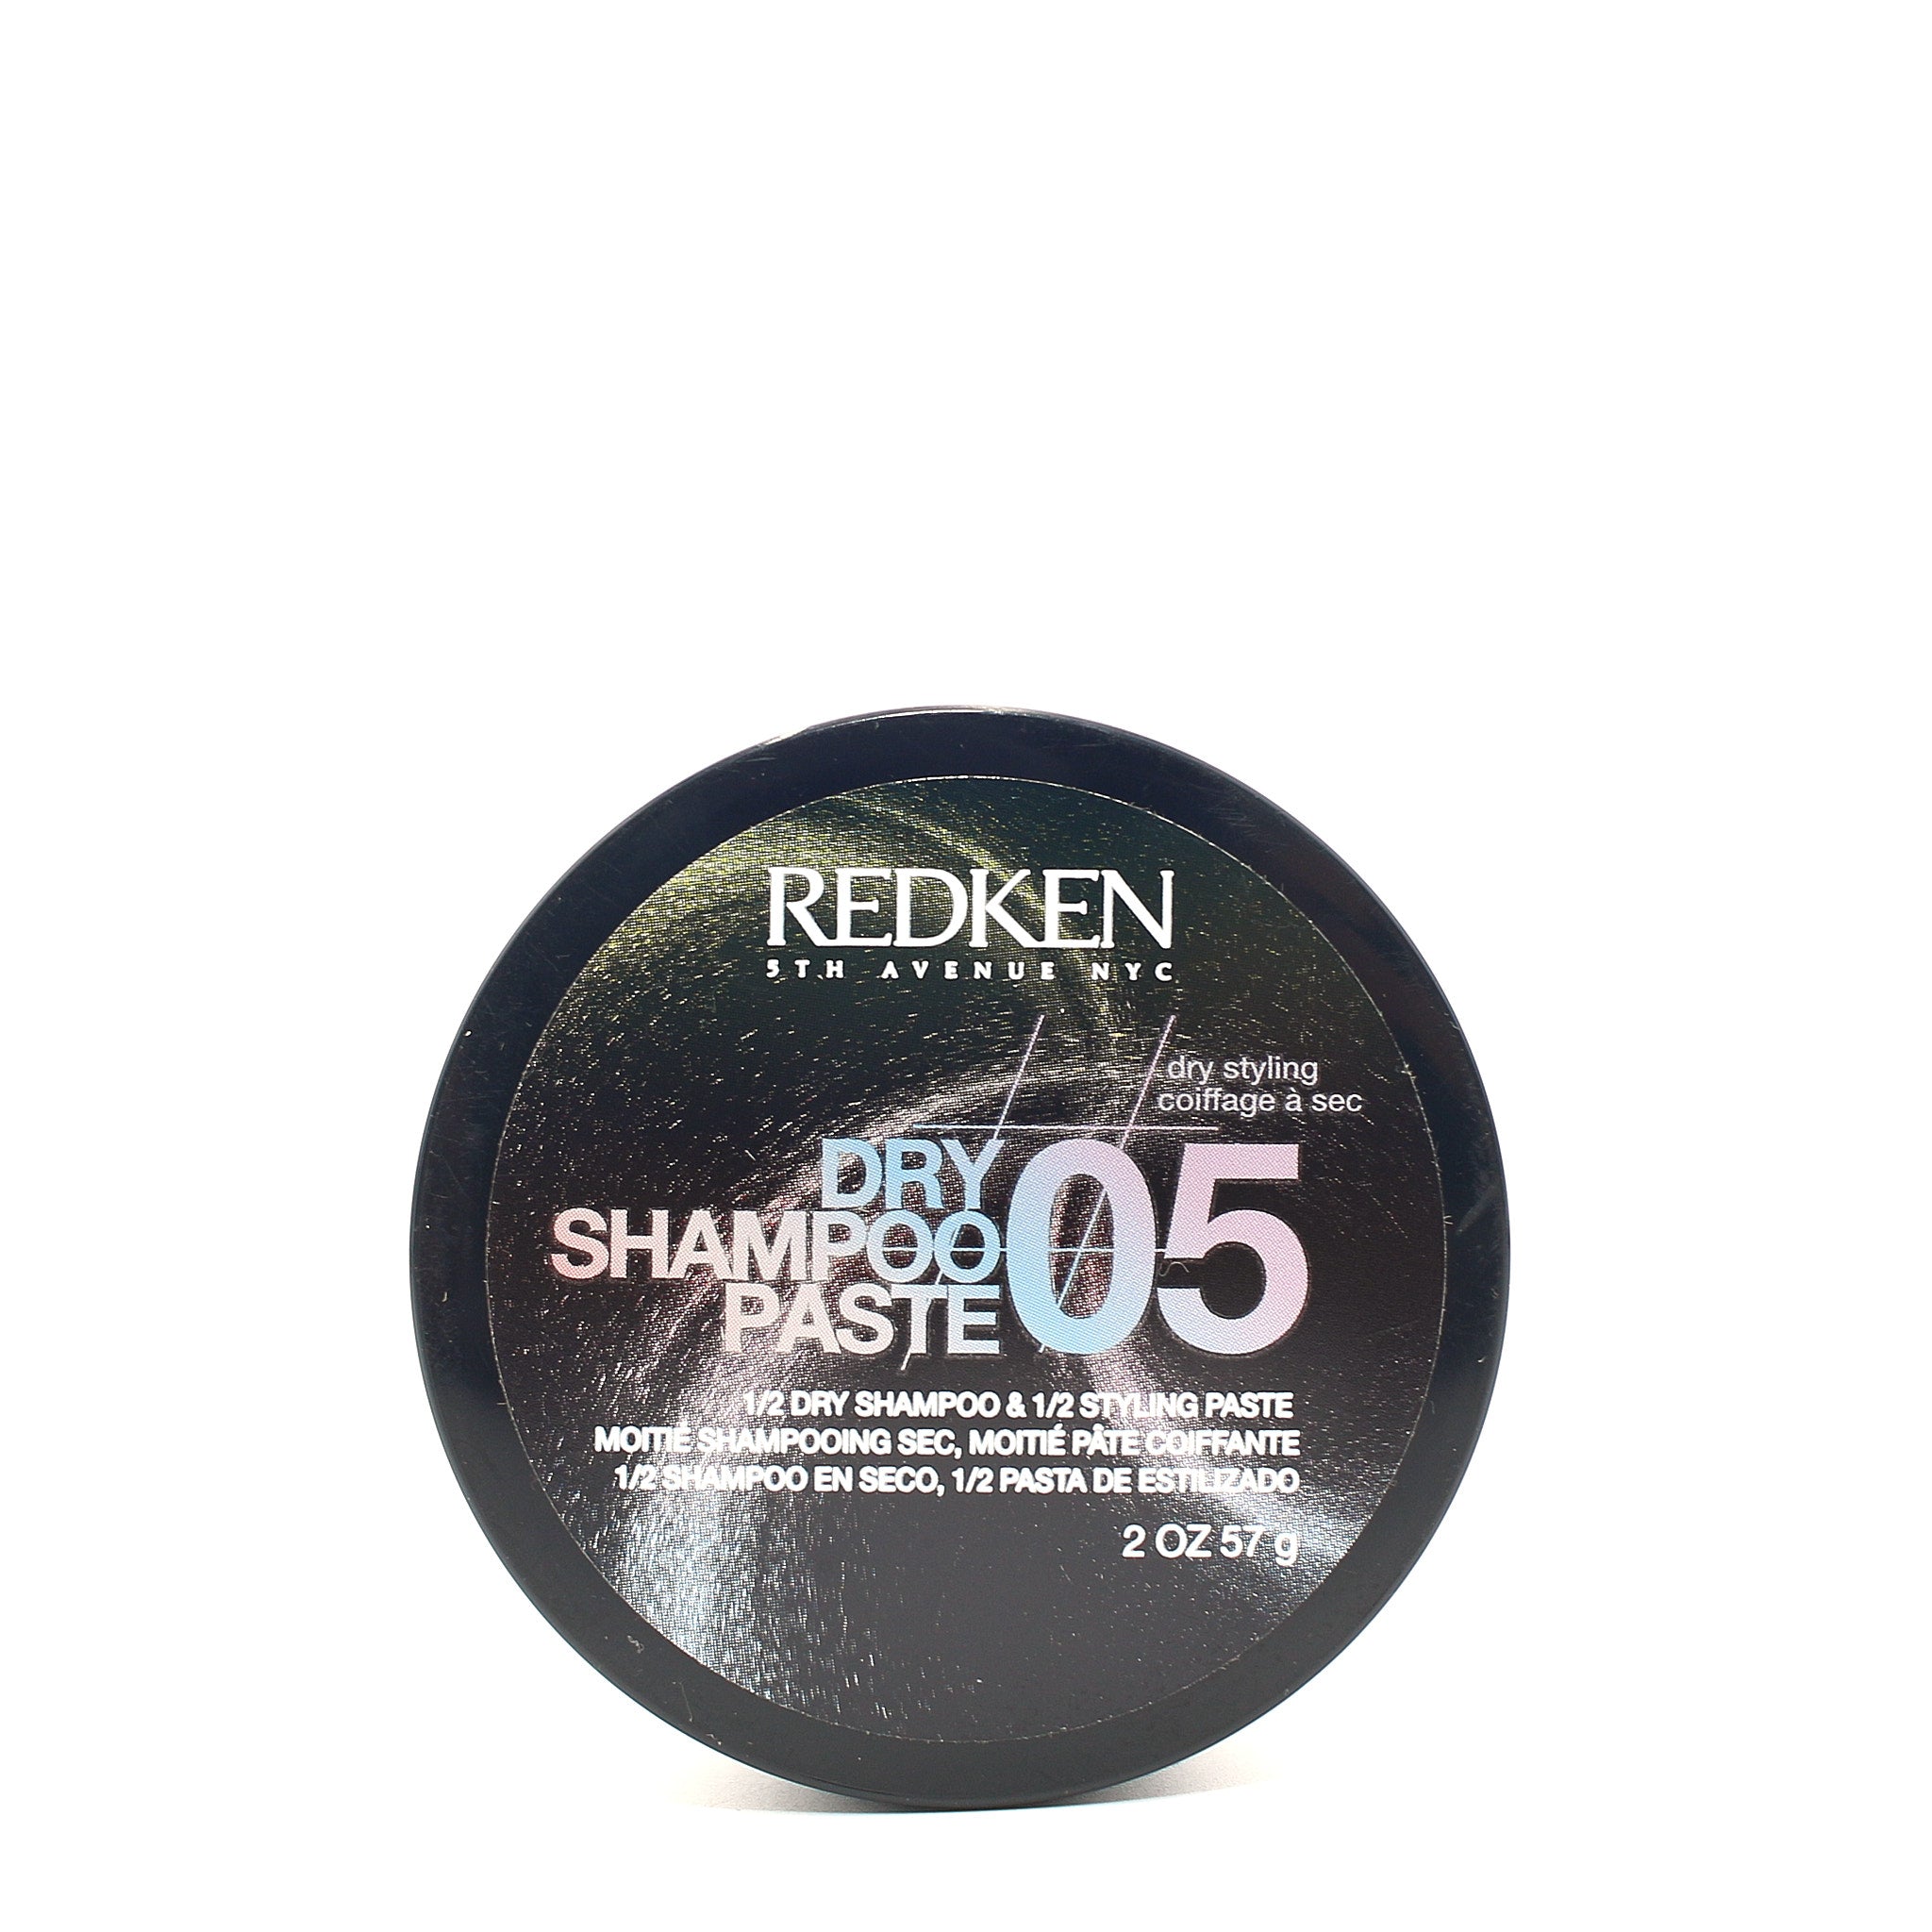 REDKEN Dry Shampoo Paste 05, 2 oz